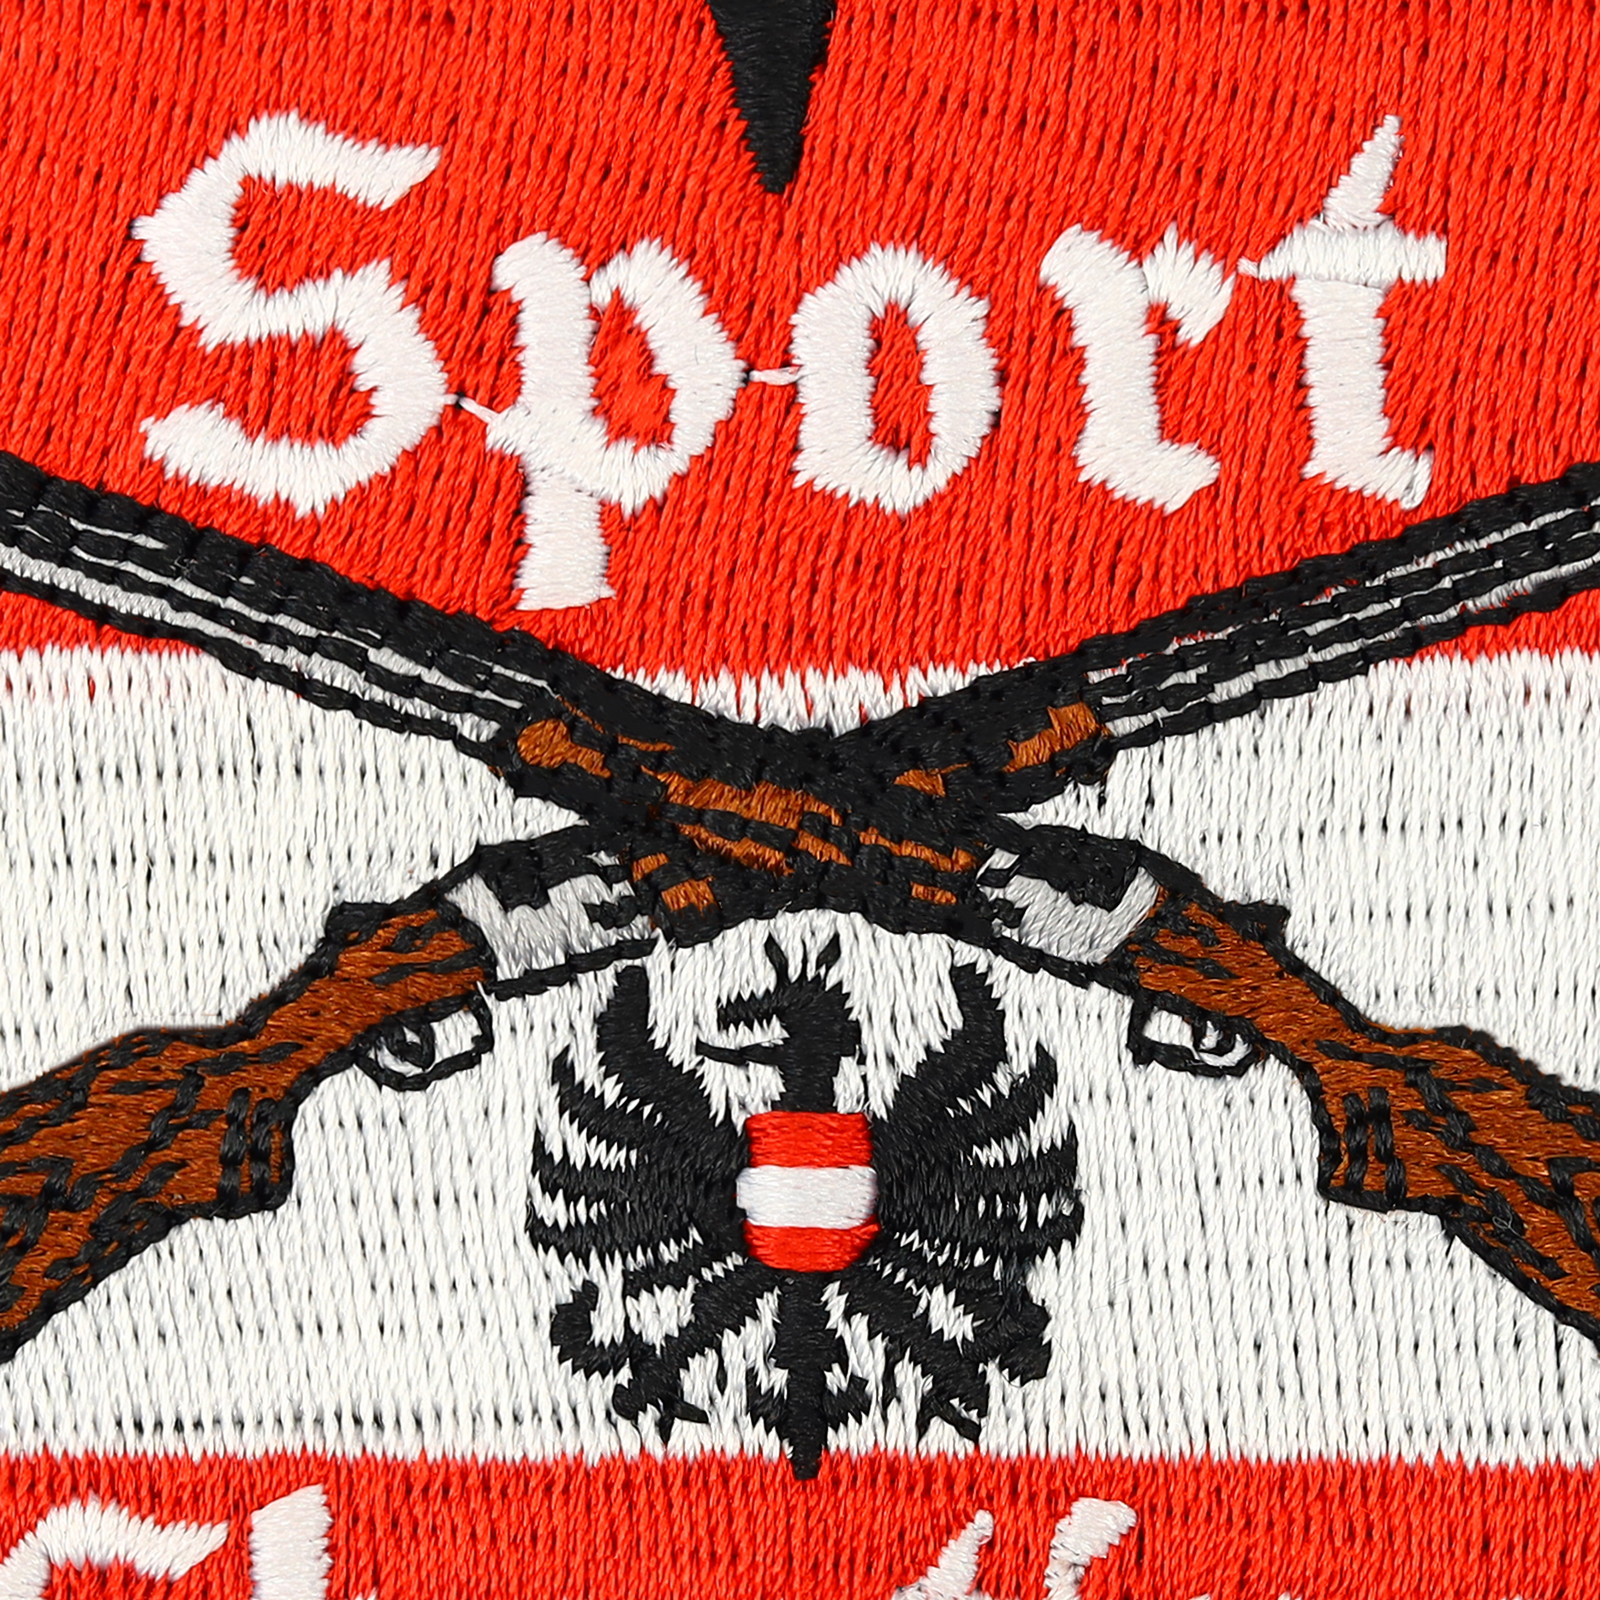 Austria Sport Shooting - Patch